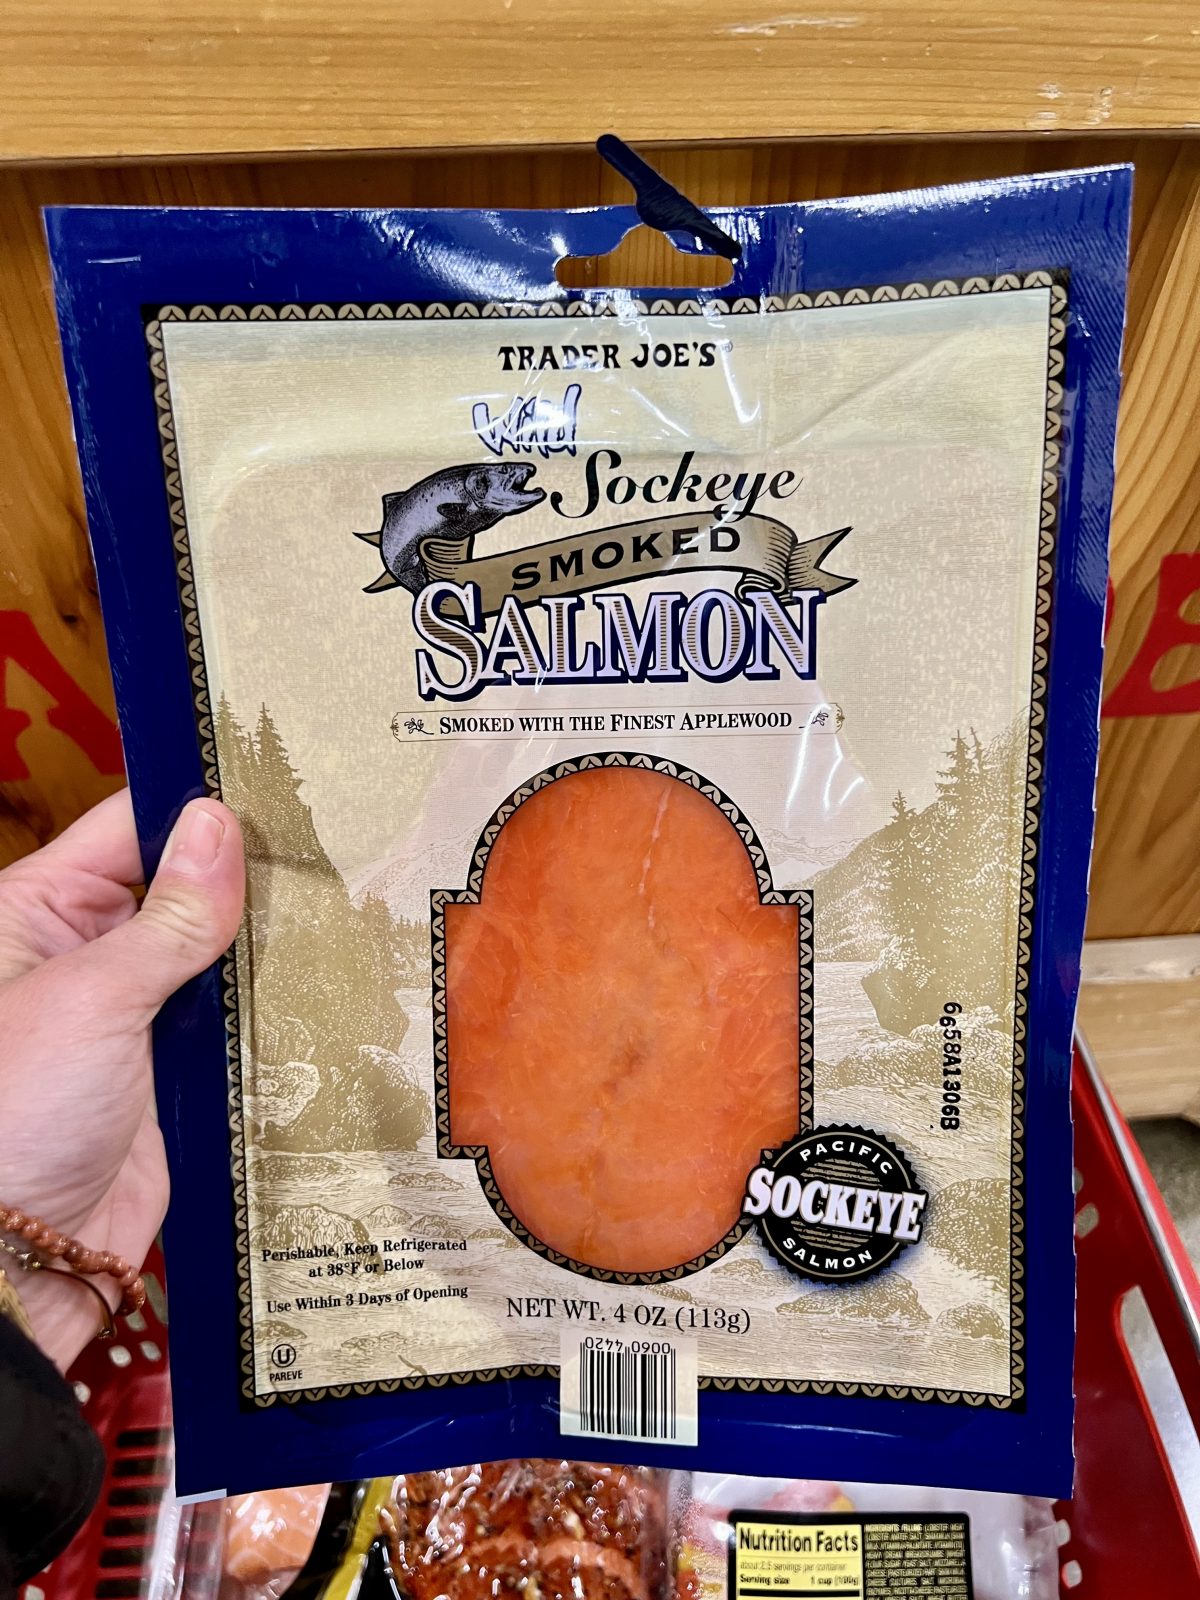 Trader Joe's smoked sockeye salmon